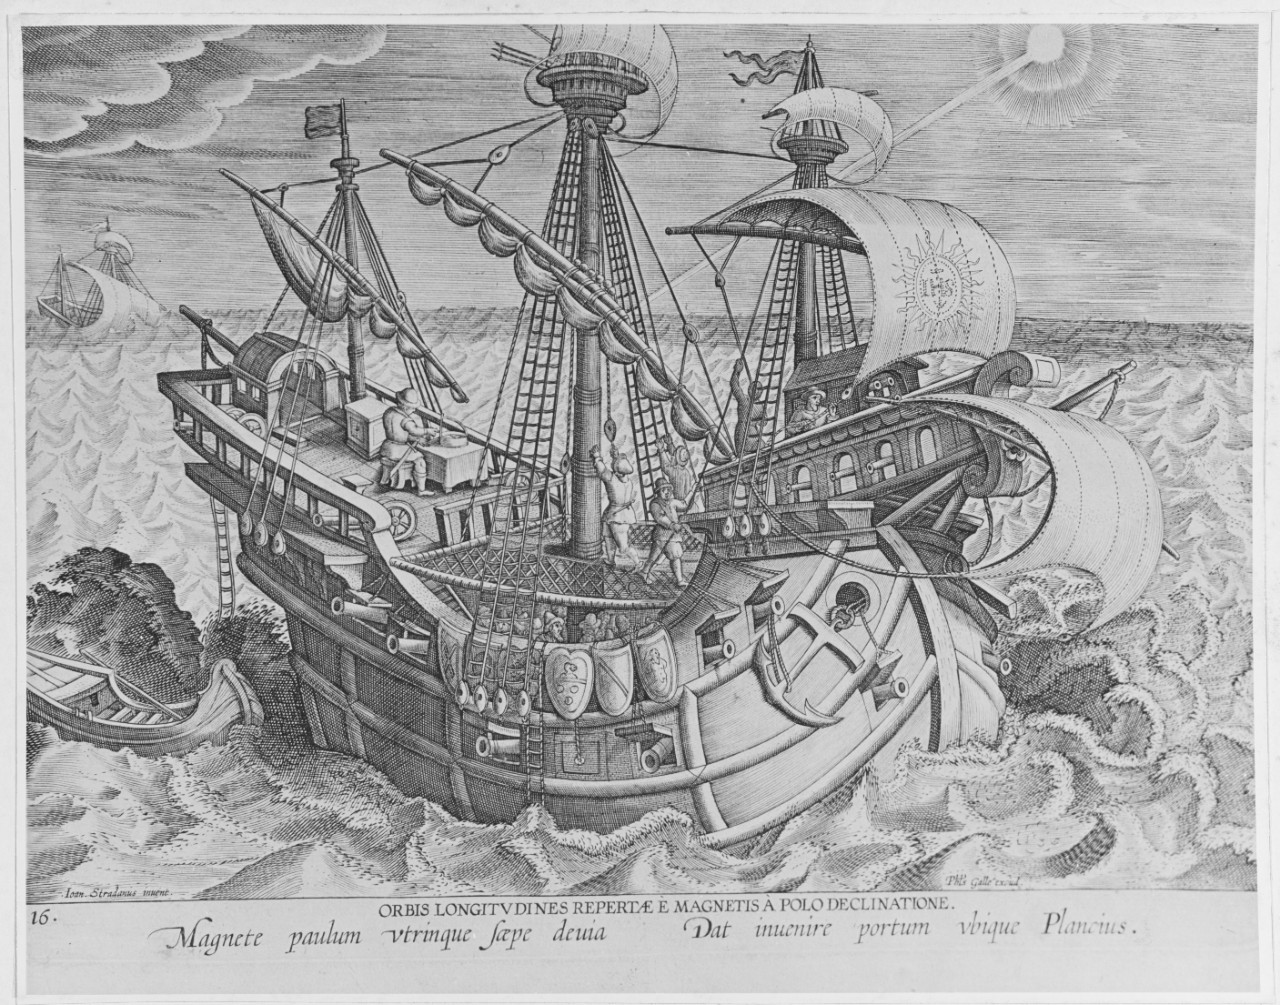 Orbis Longitudines Repertae E Magnetis A Polo Declinatione. 16th Century Ship (Spanish) taking longitude from the sun.